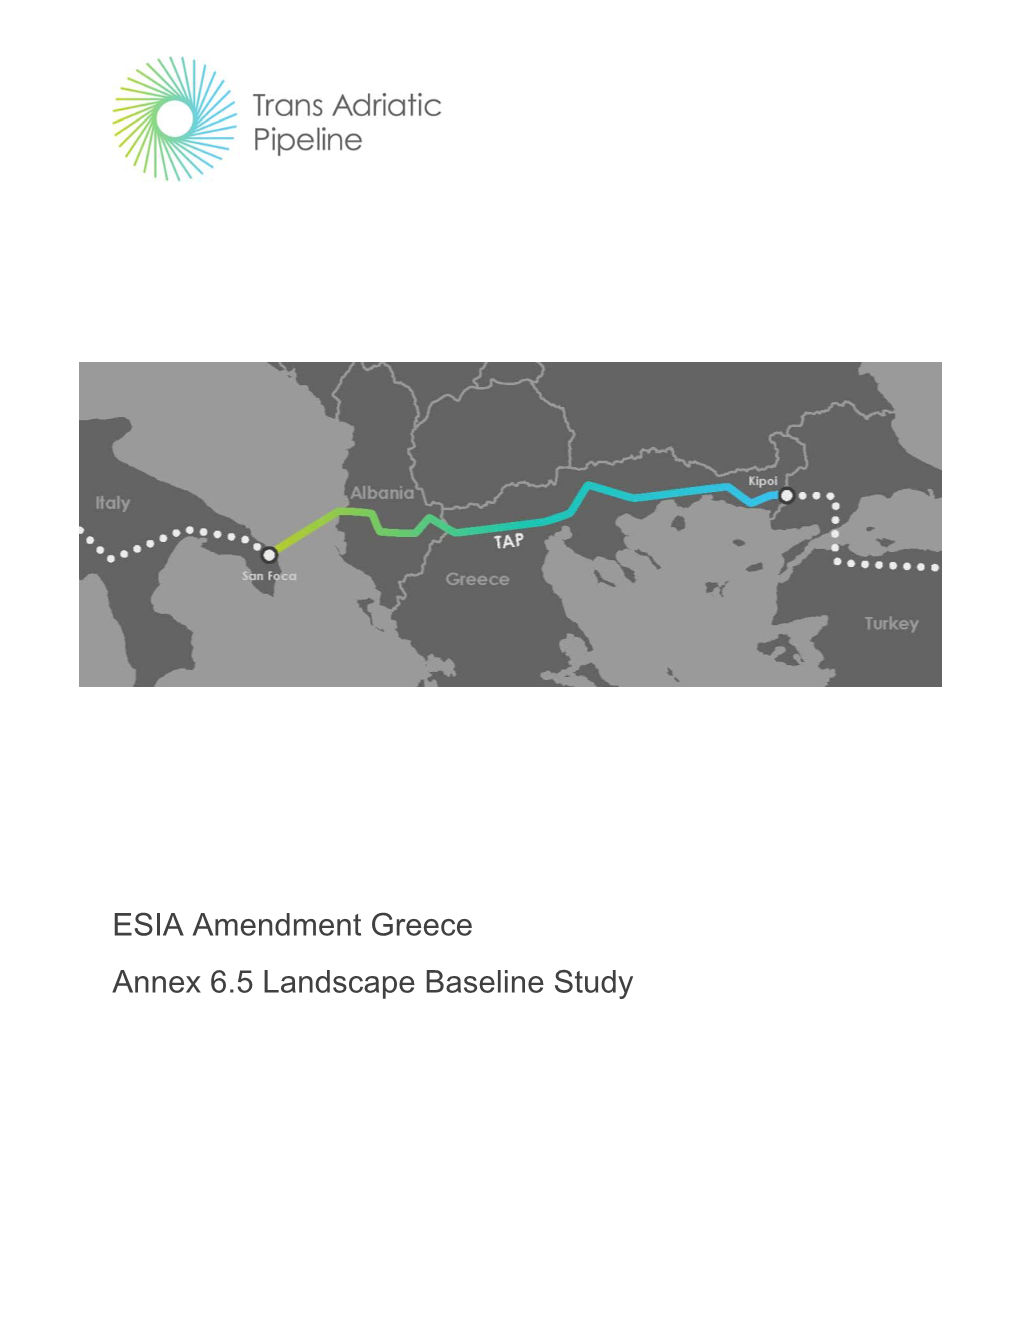 ESIA Amendment Greece Annex 6.5 Landscape Baseline Study